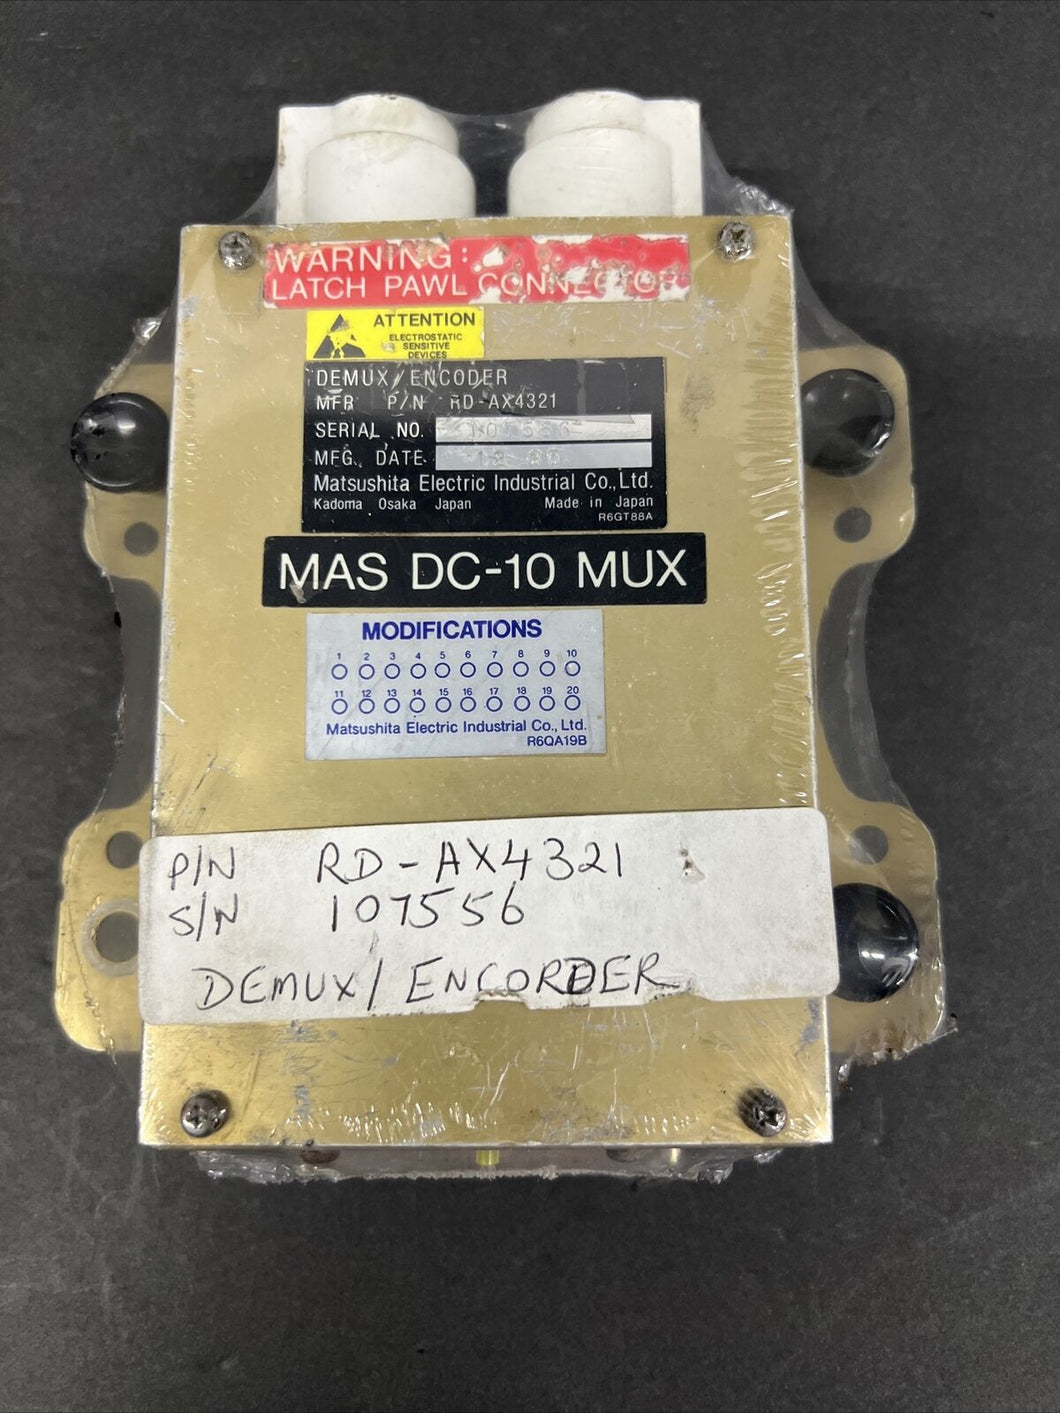 Demux Encoder RD-EFX 4321